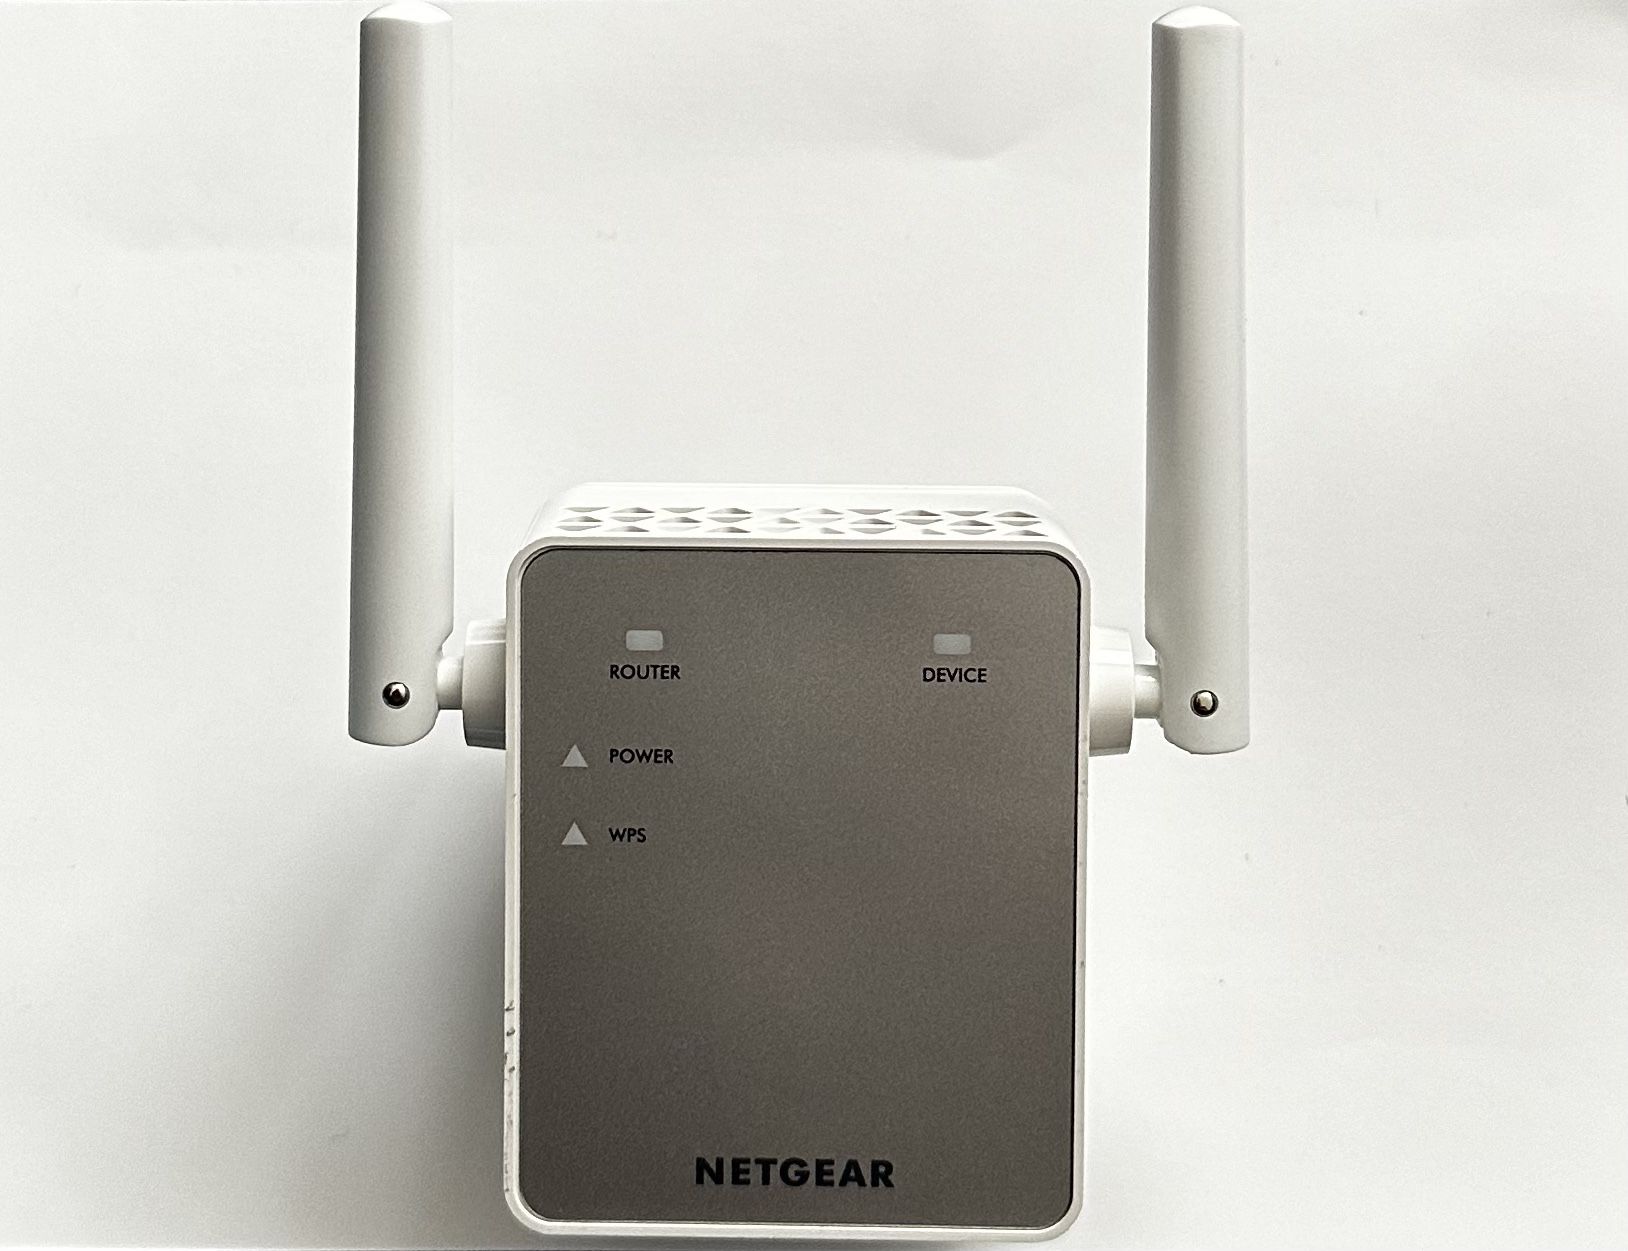 Netgear WiFi Range Extender